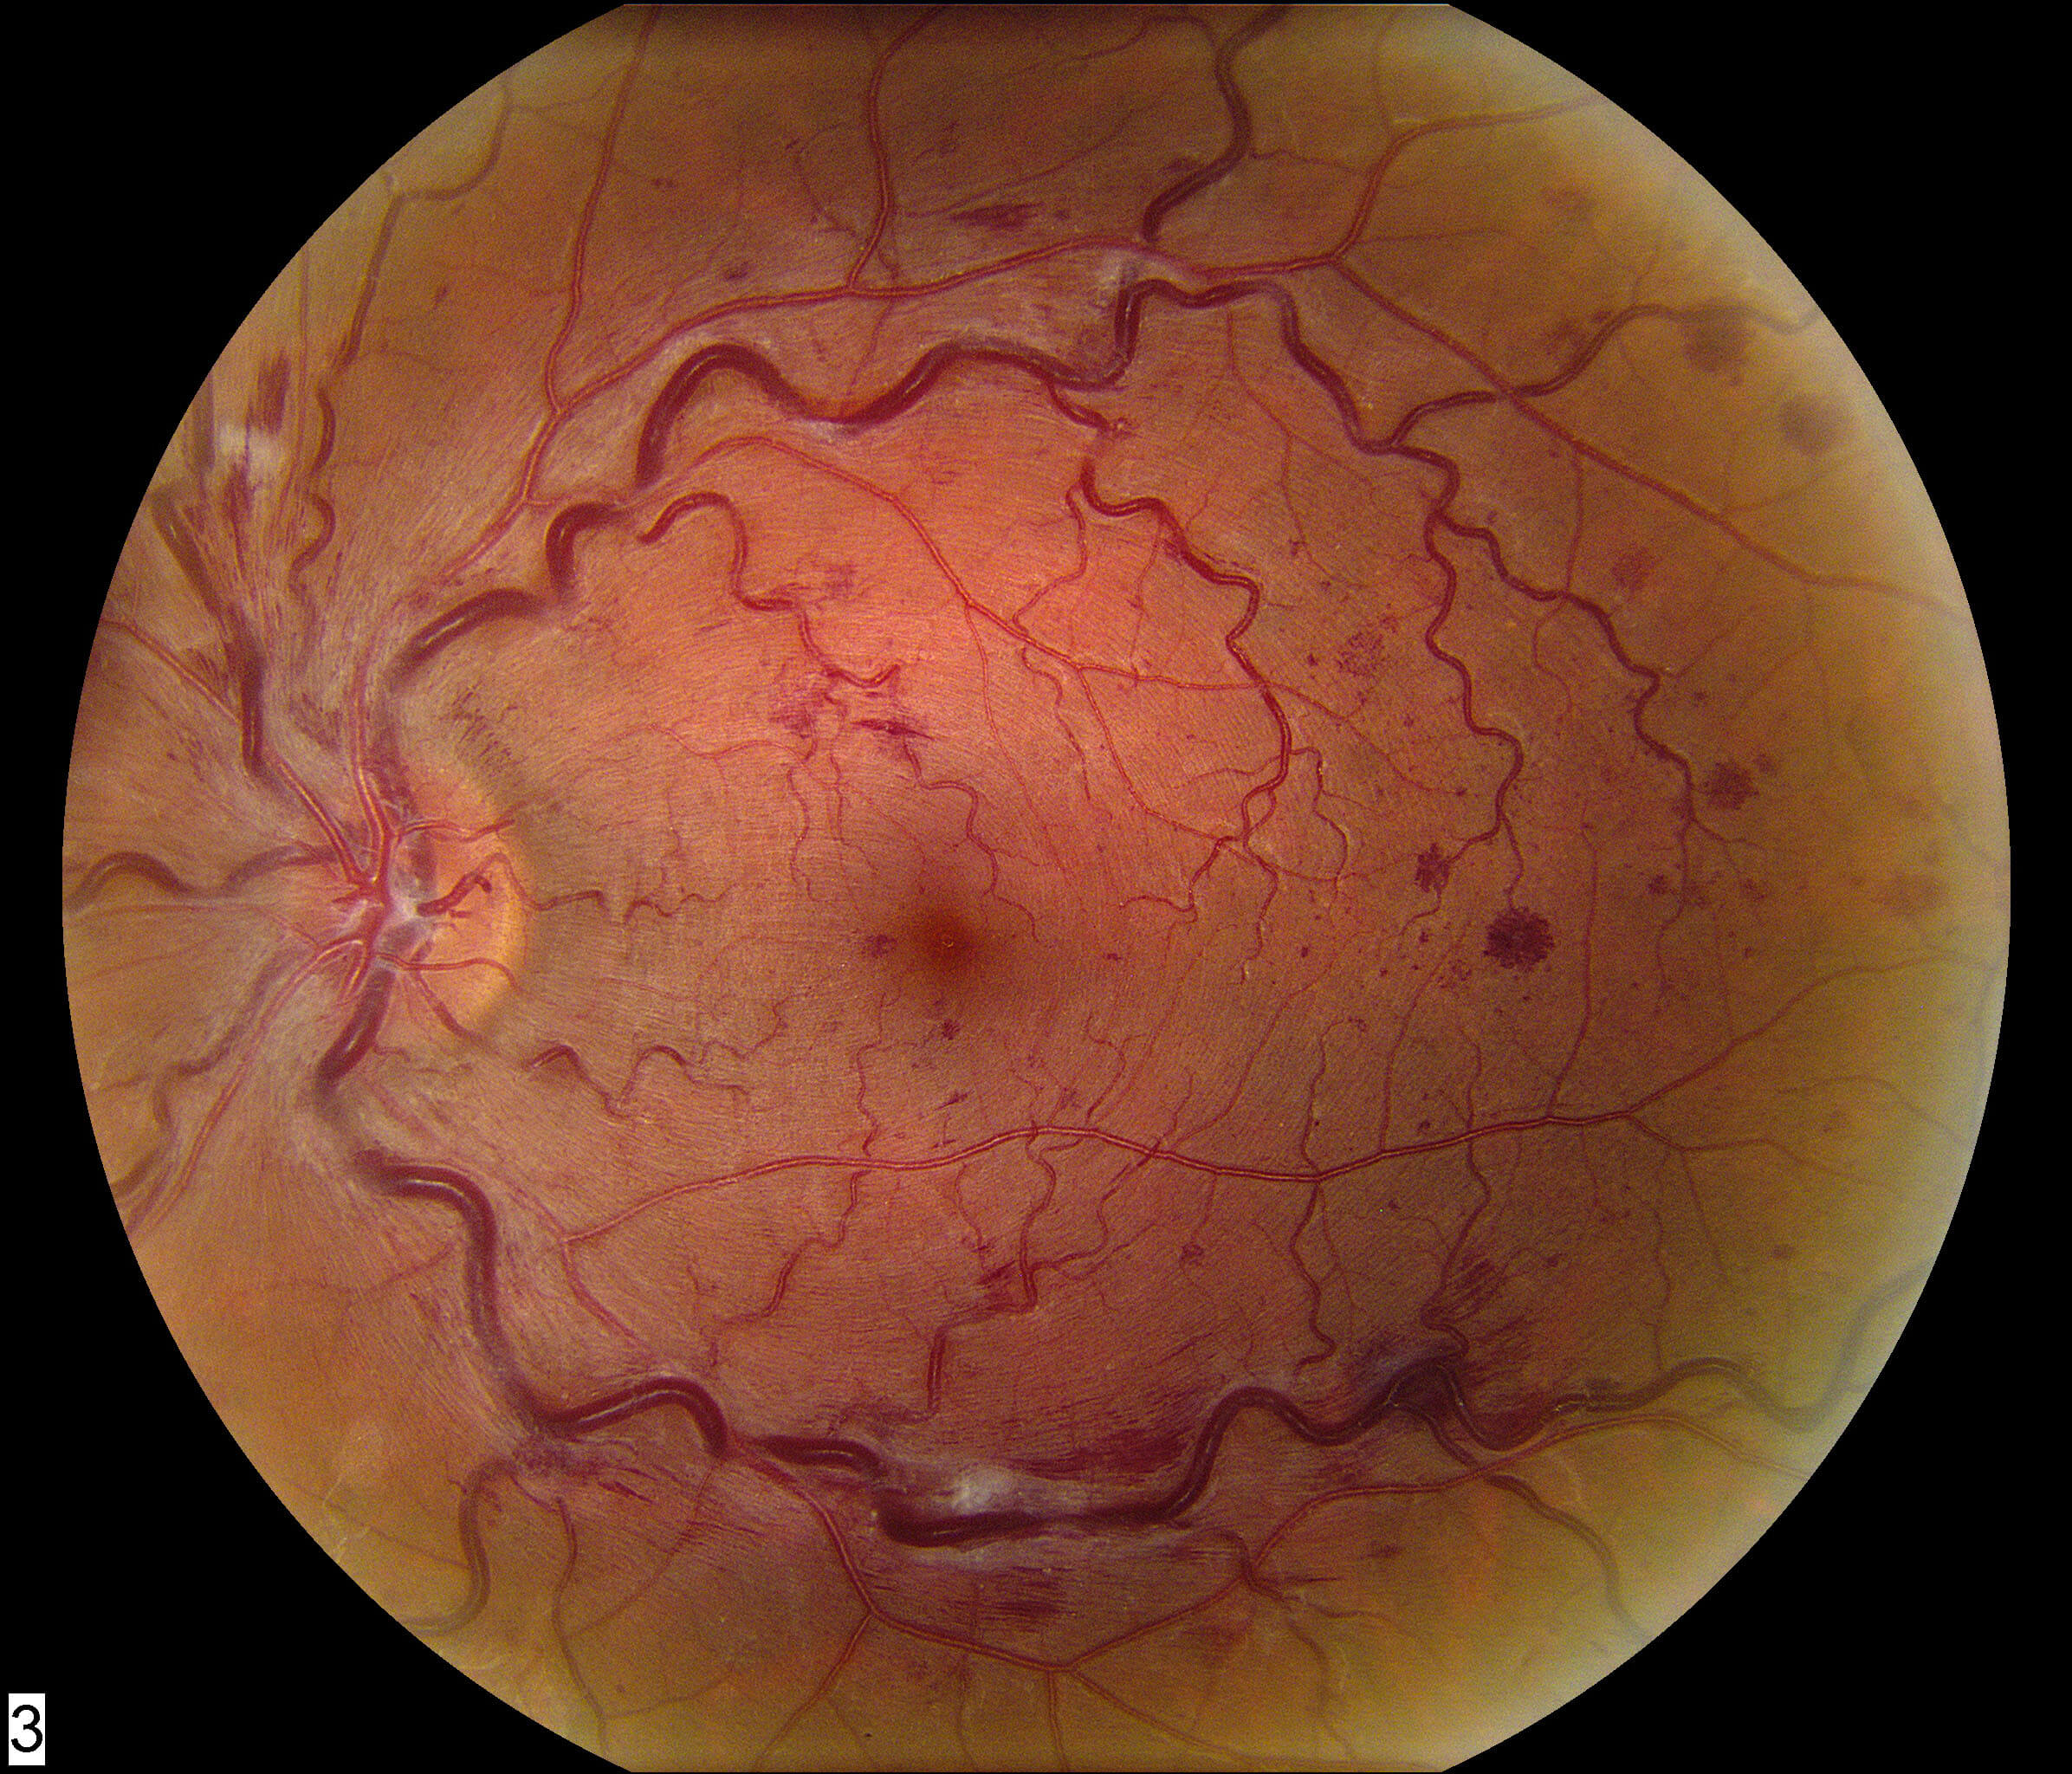 Non-proliferative diabetic retinopathy with macular edema